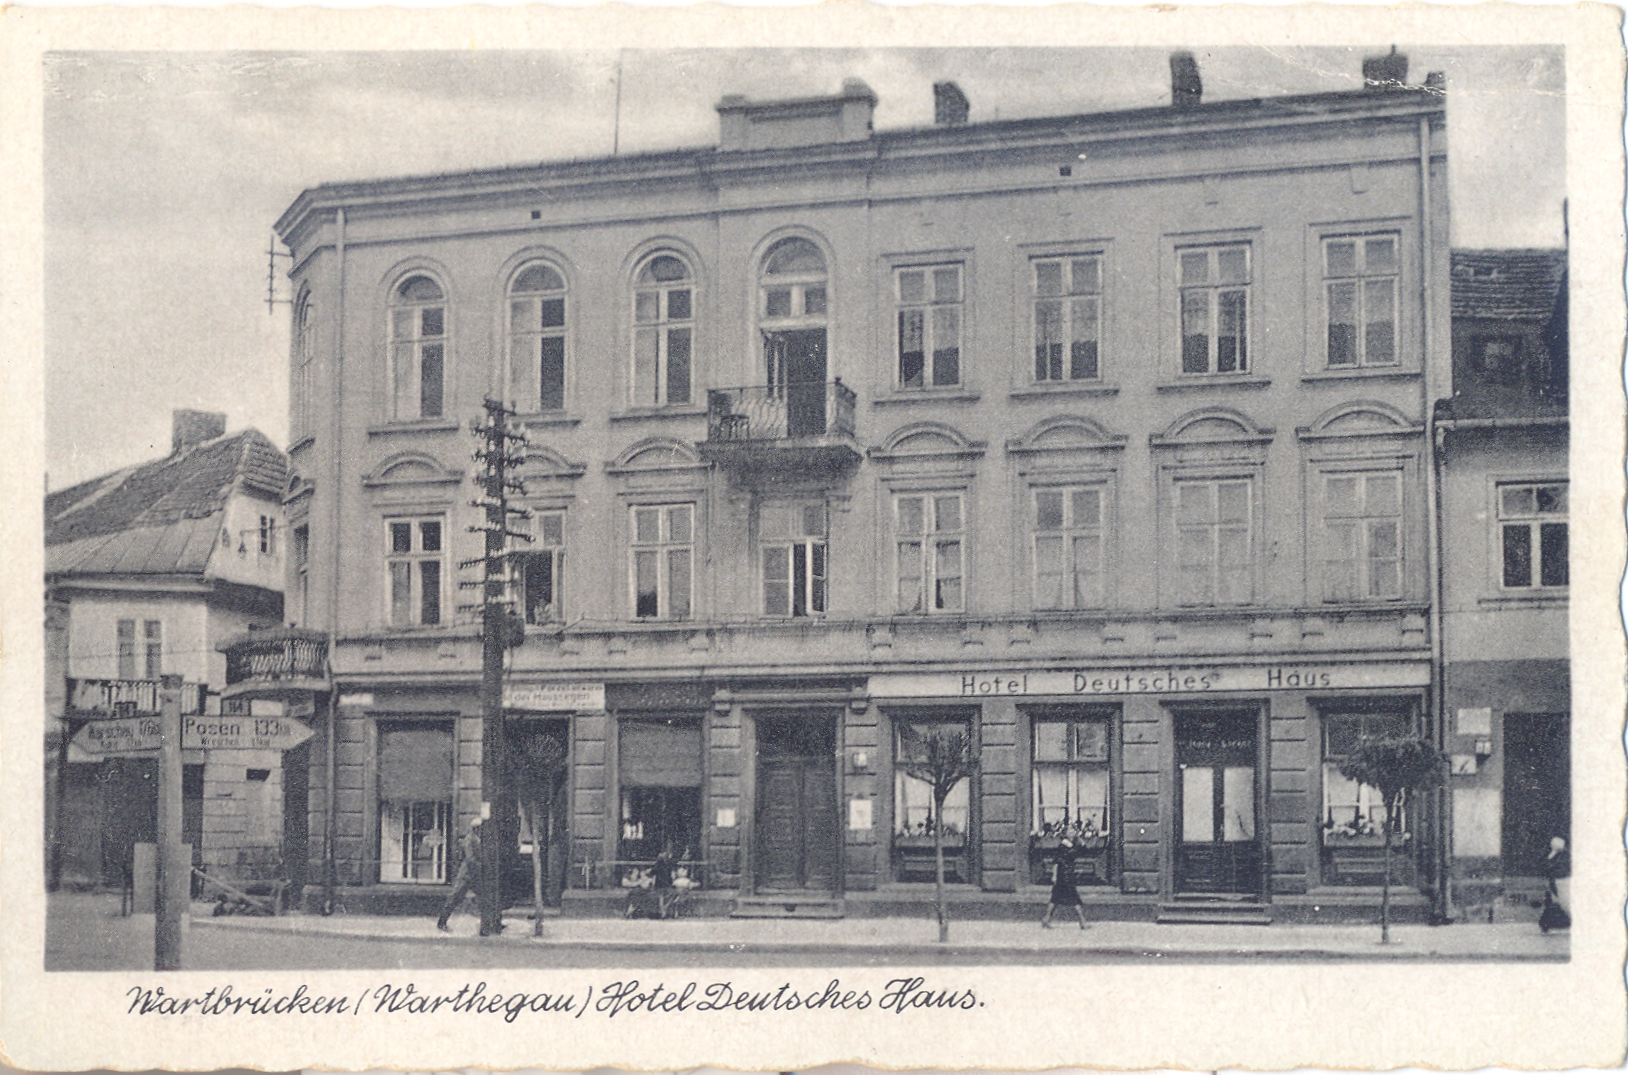 Hotel na Starym Rynku